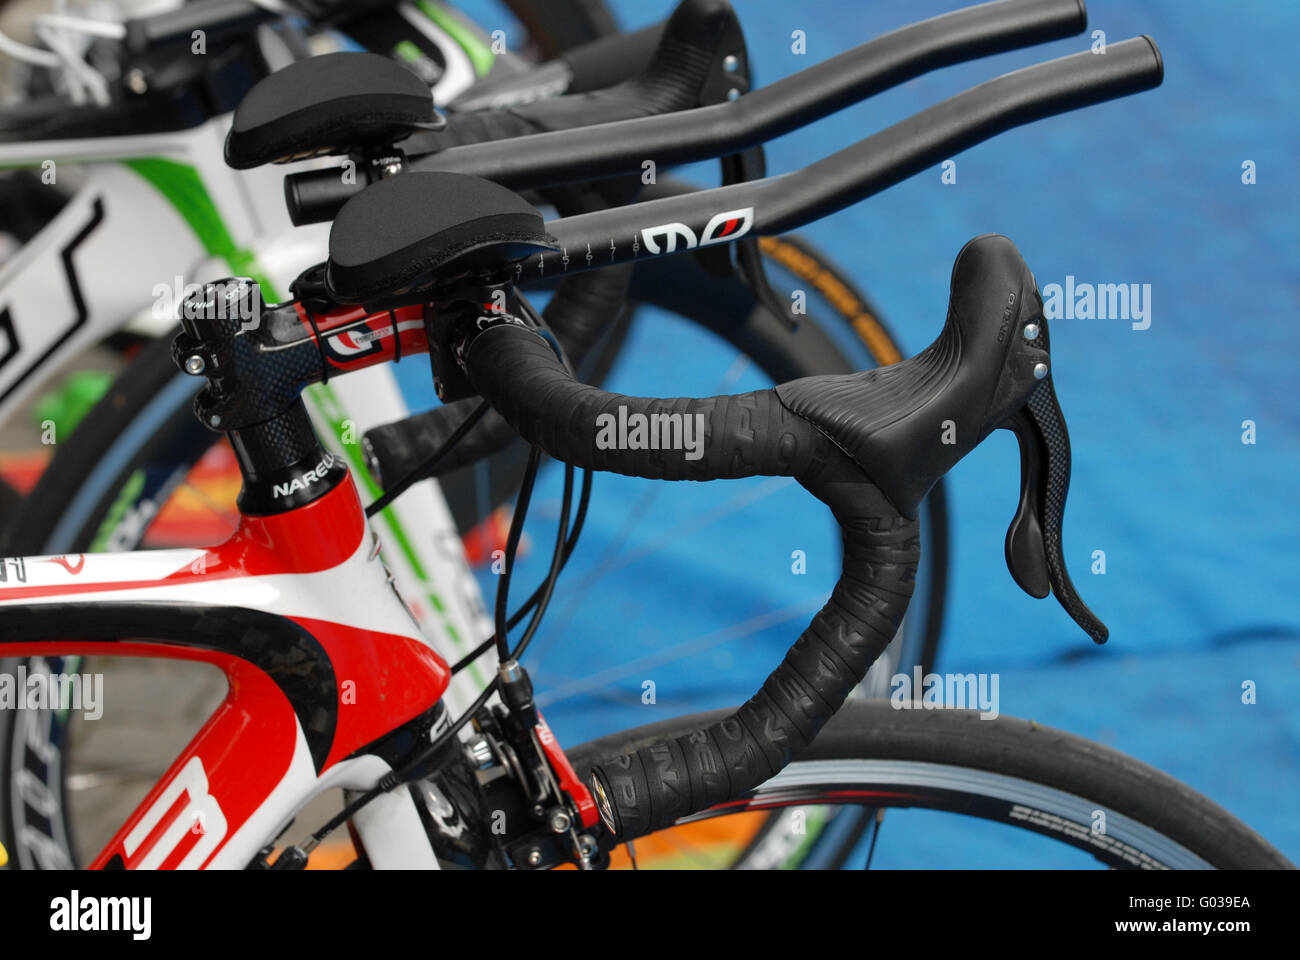 Aero lenker triathlon hi-res stock photography and images - Alamy